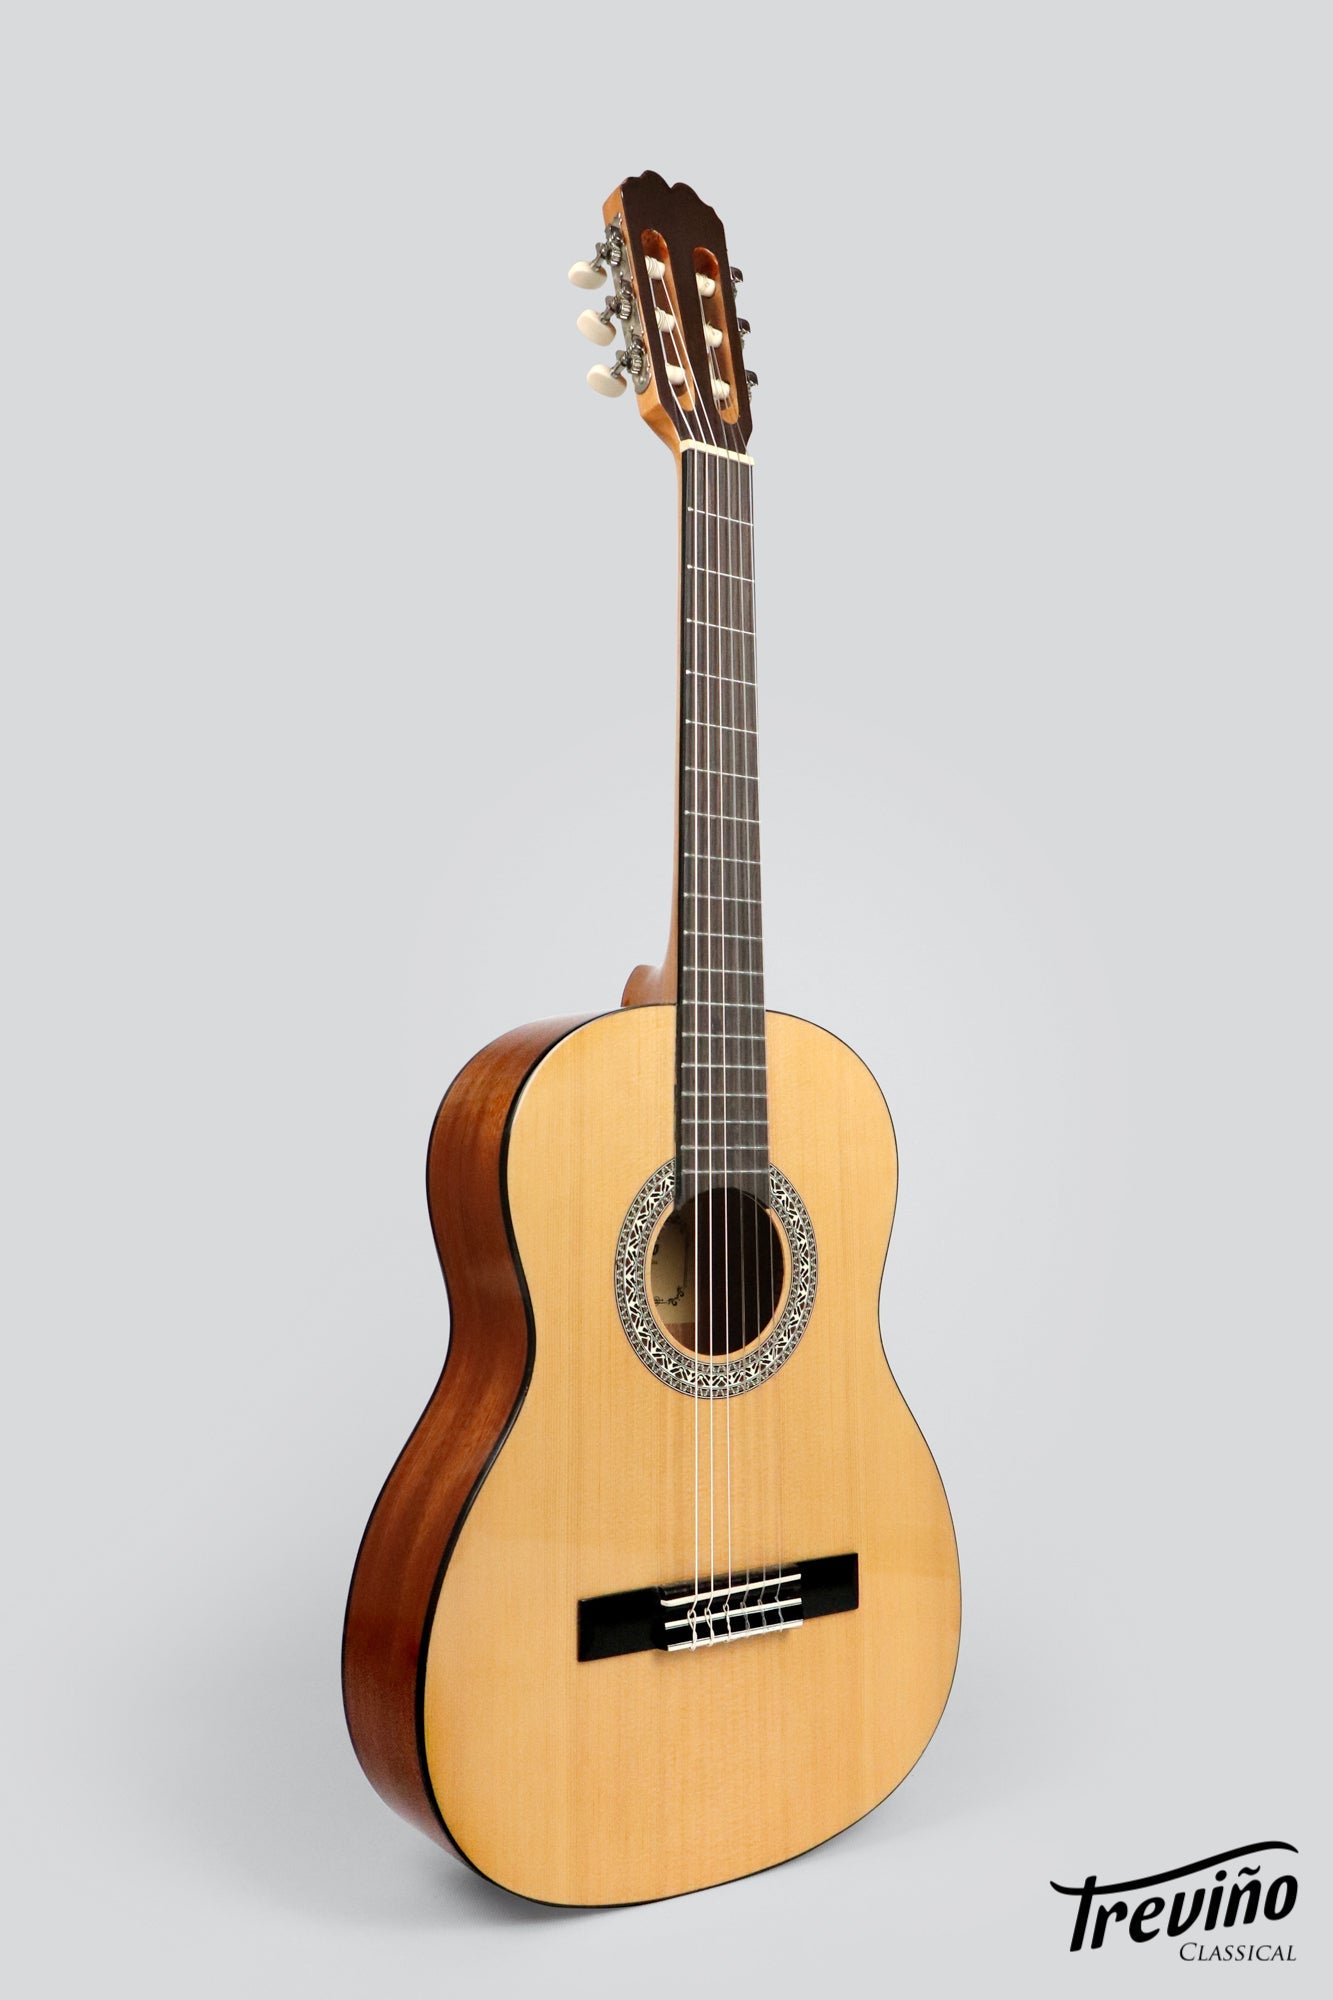 Trevino C393-59 Classical Guitar Nylon String (Natural) 3/4 Size